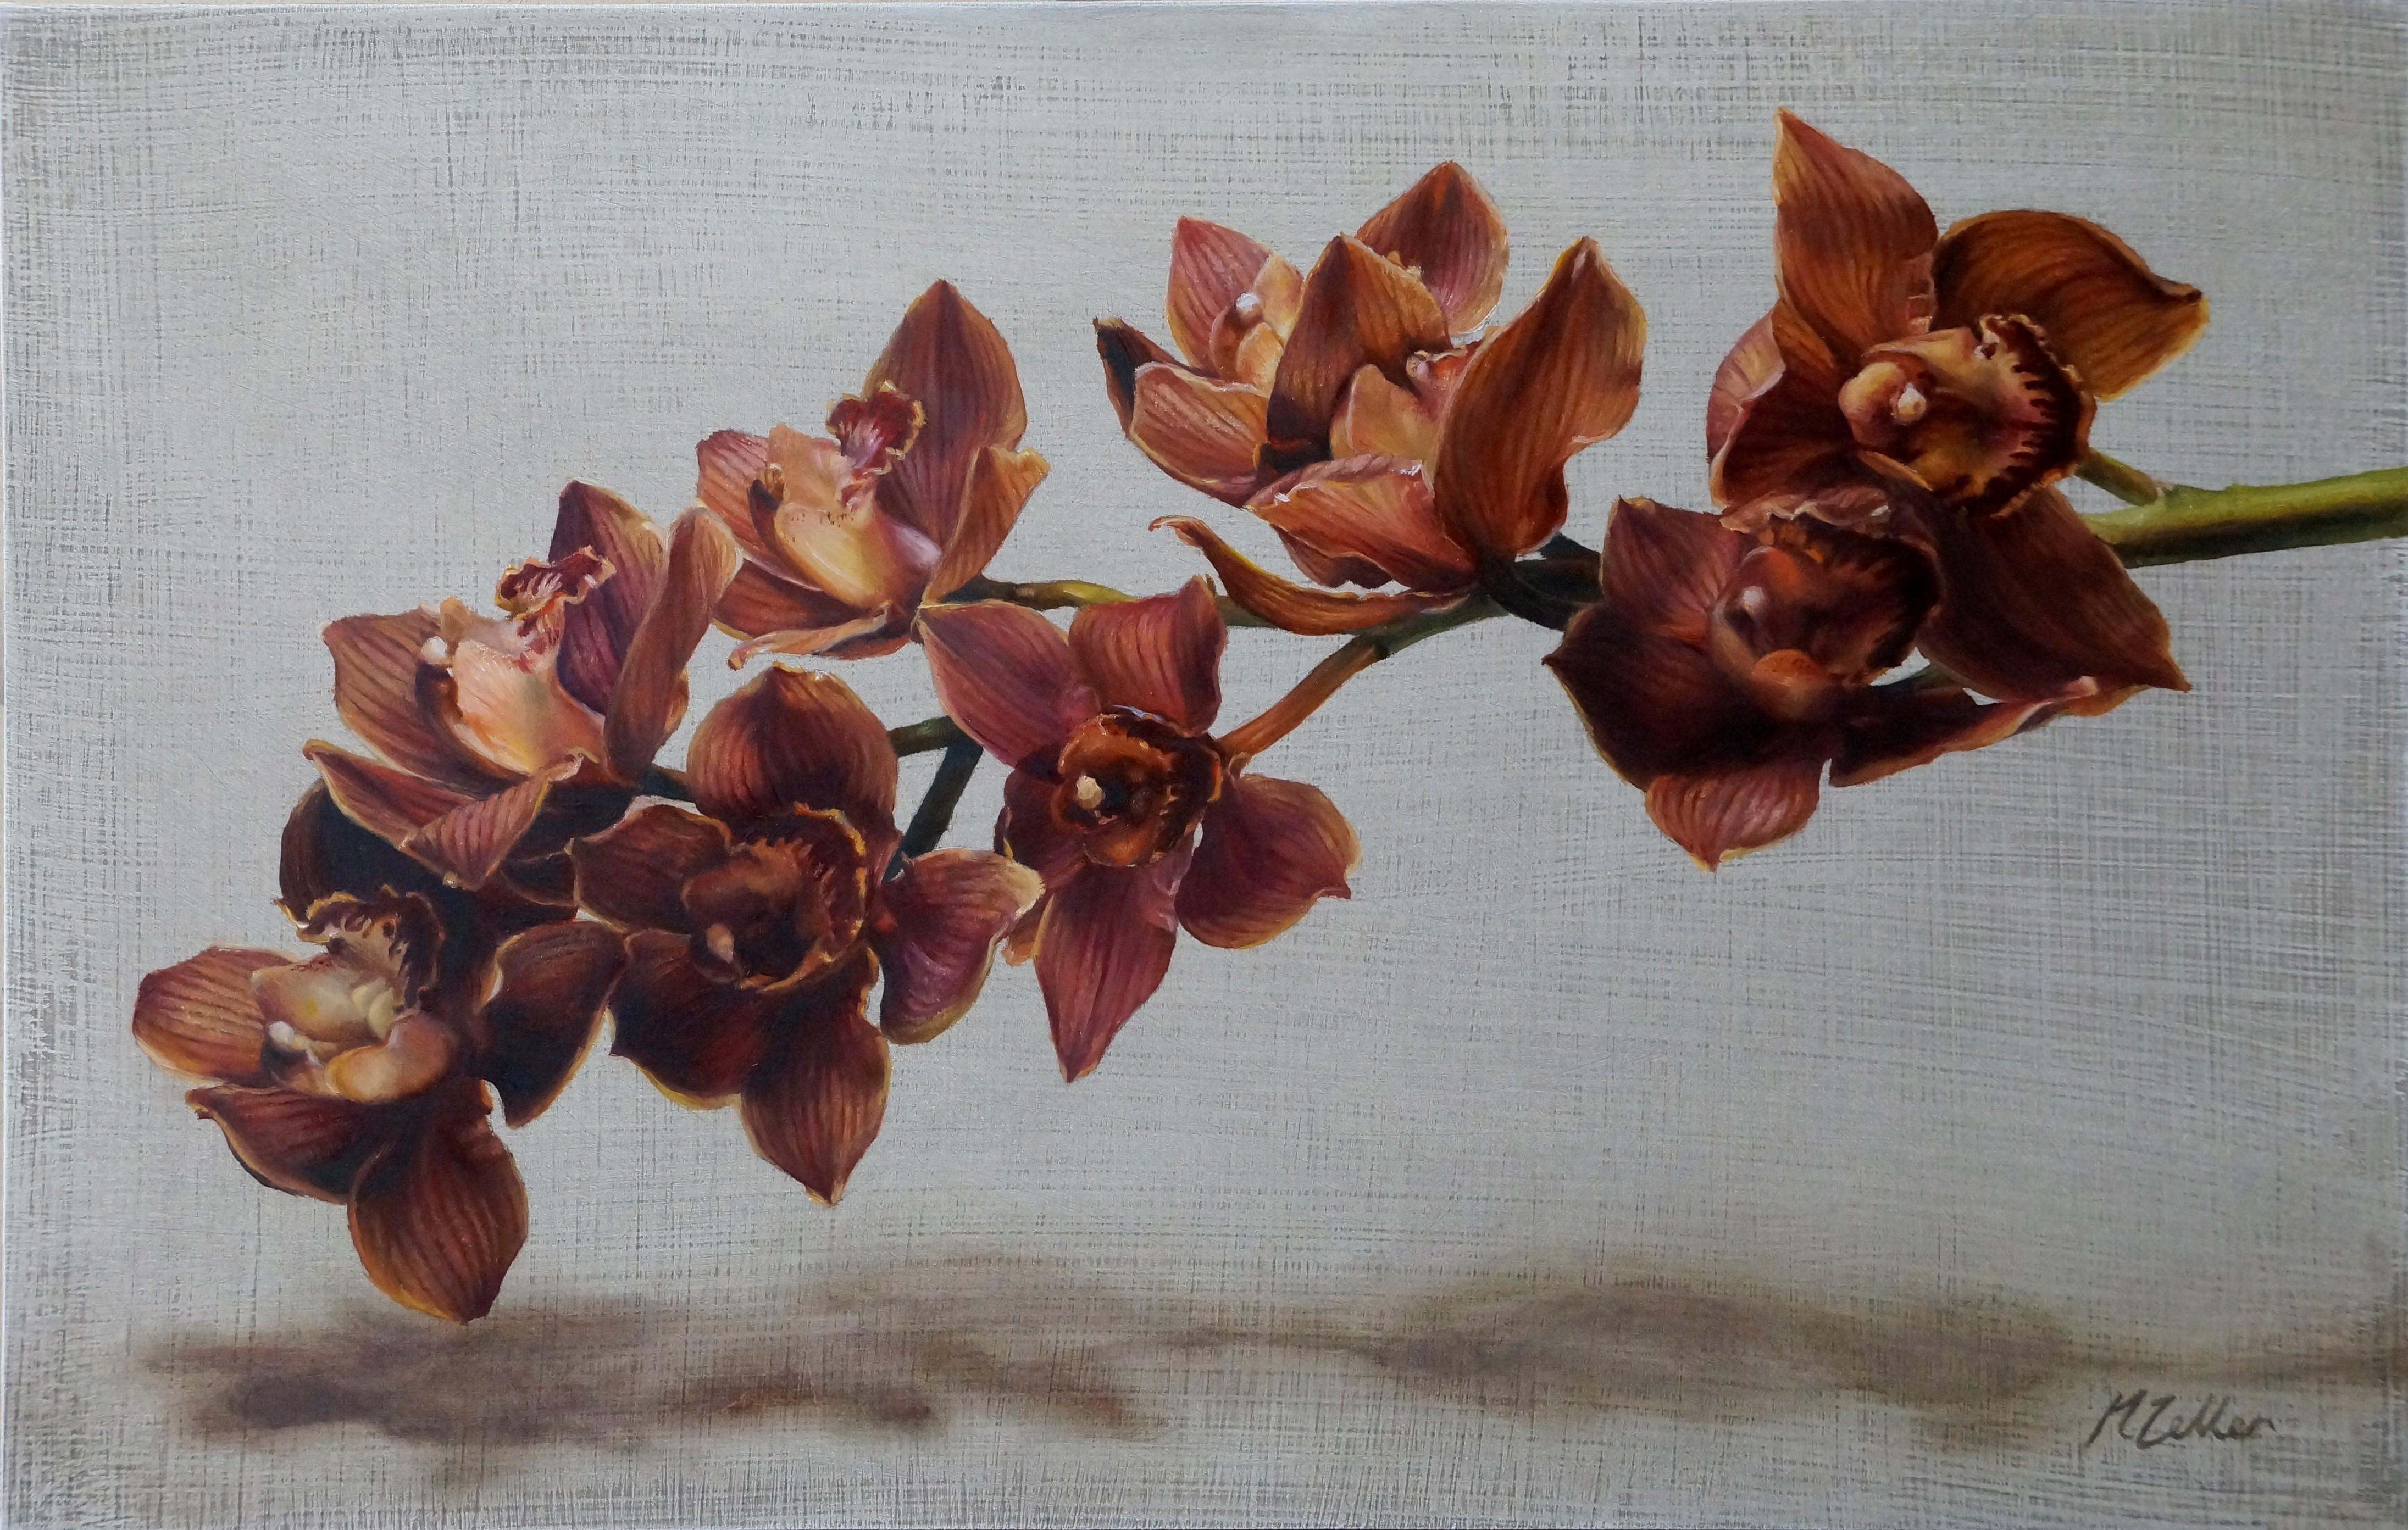 Narelle Zeller Figurative Painting - "Cymbidium Orchids II" Oil painting